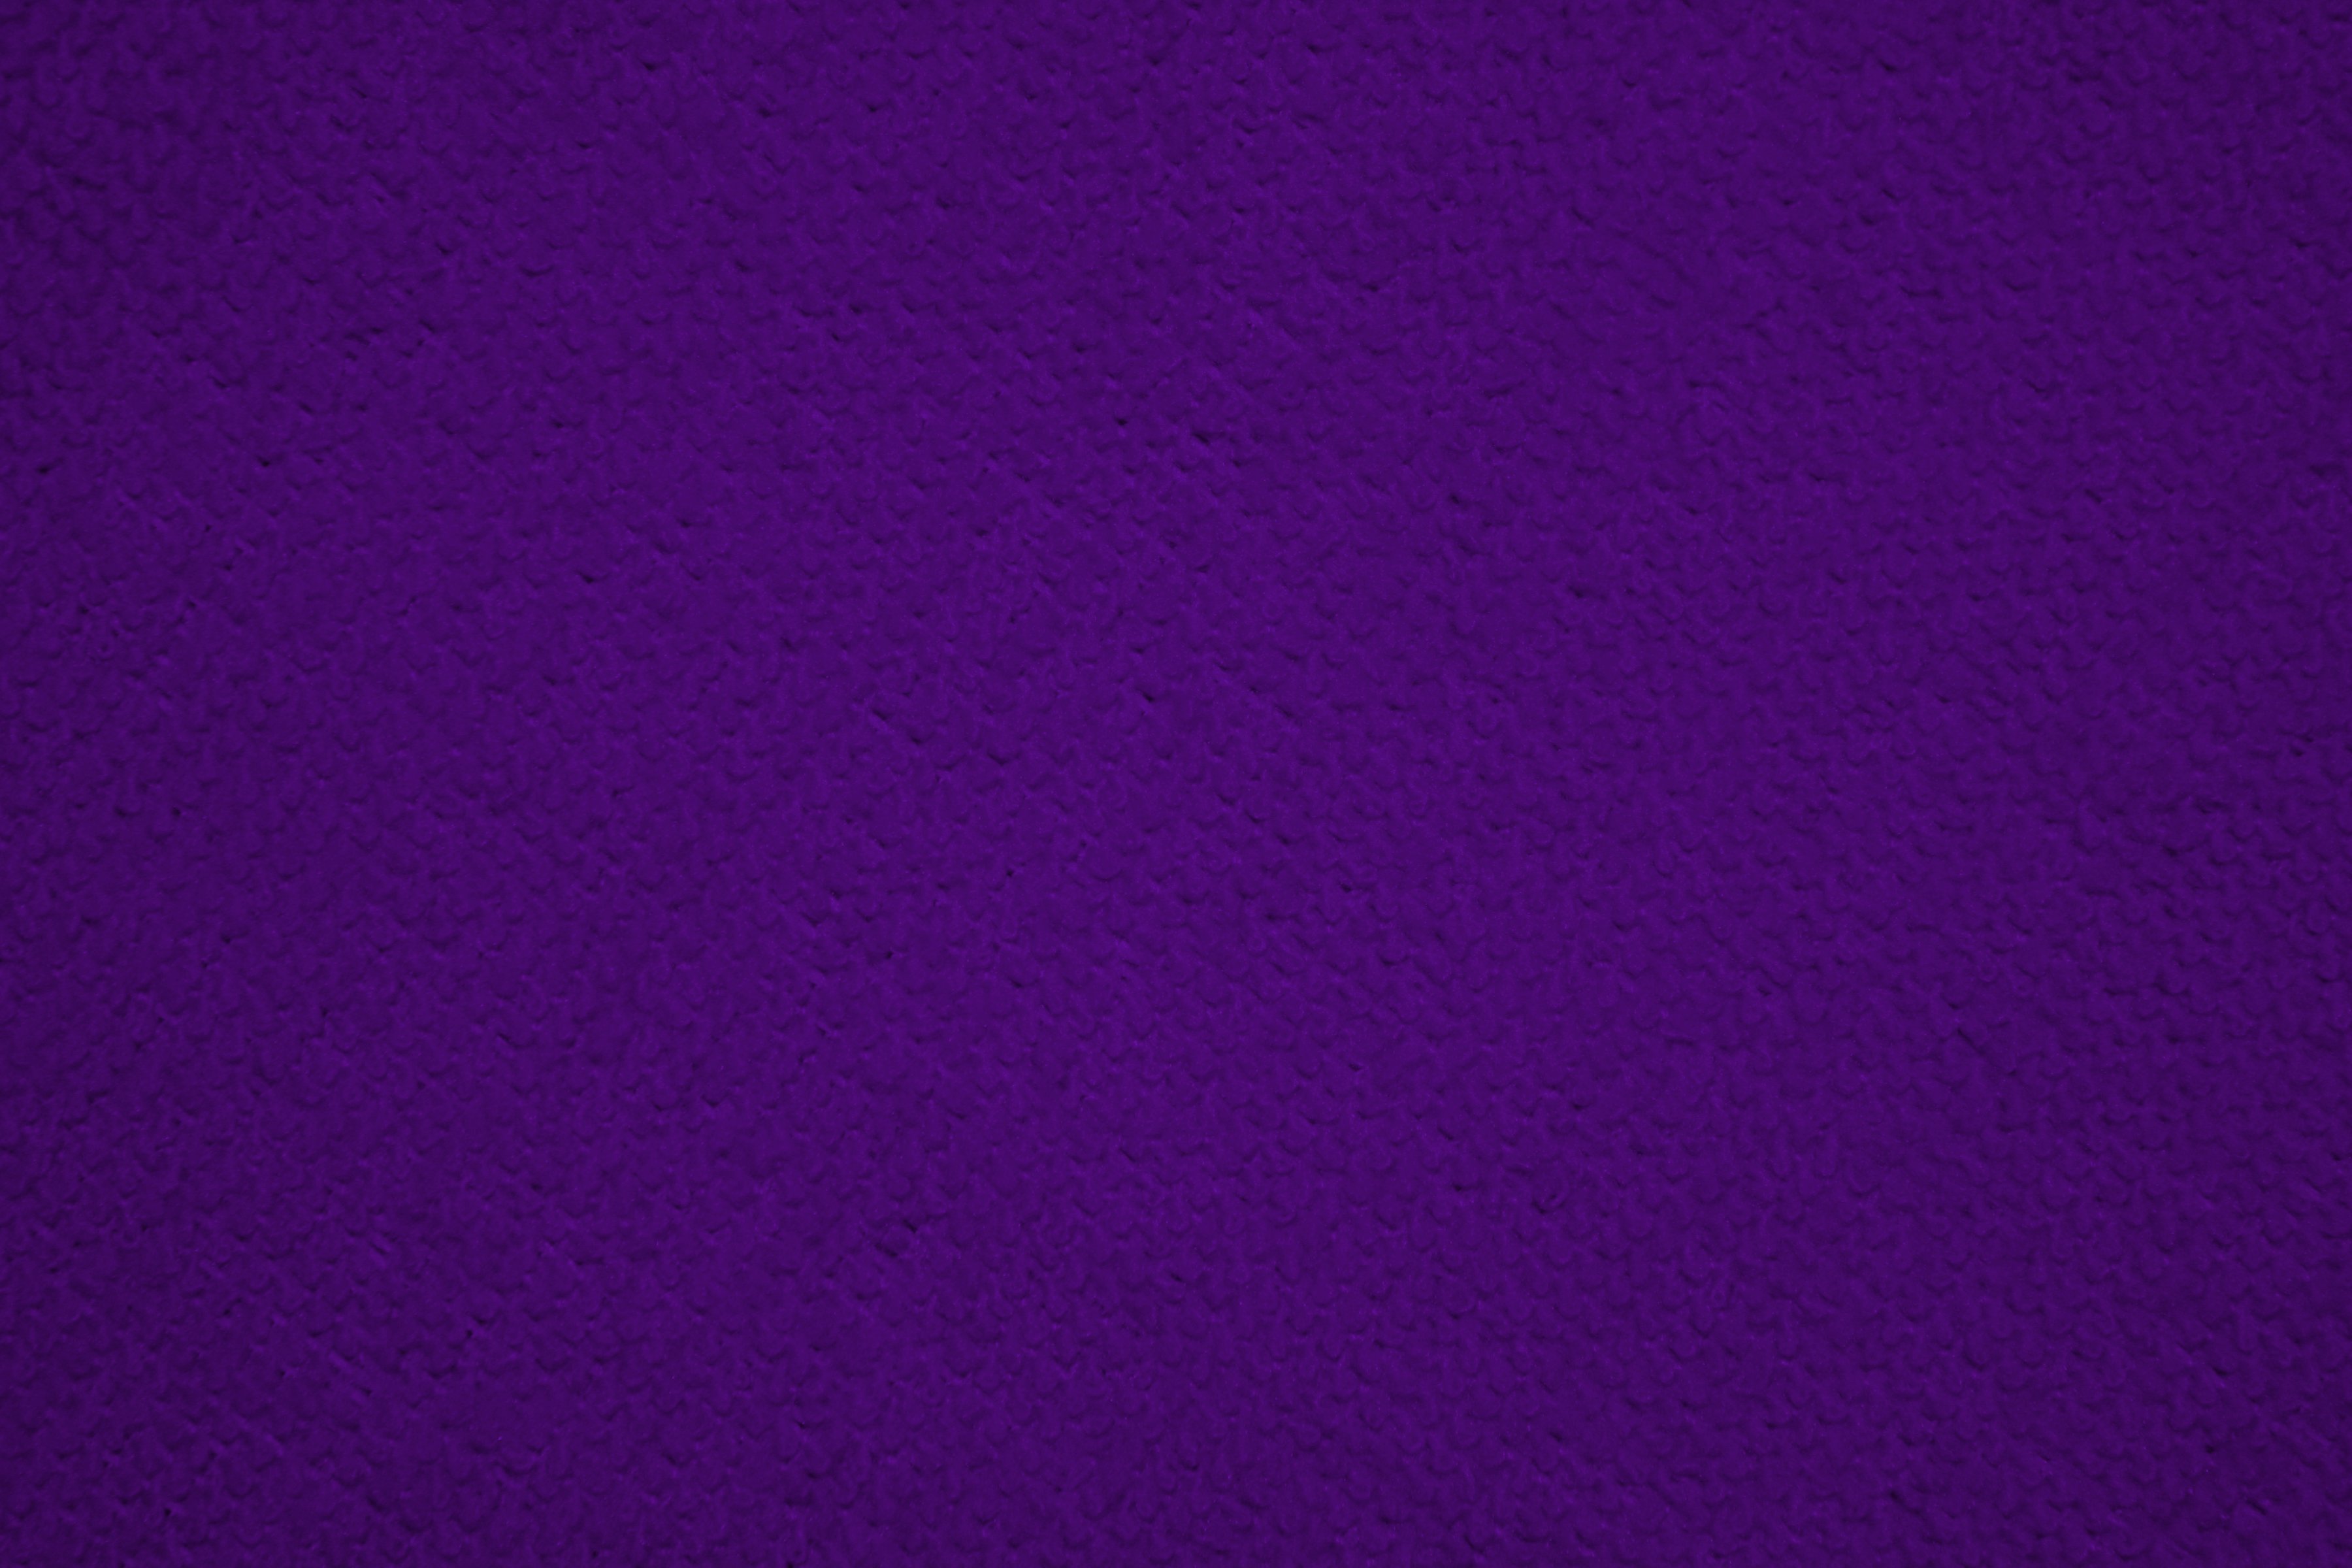 Deep Purple Microfiber Cloth Fabric Texture Picture Photograph